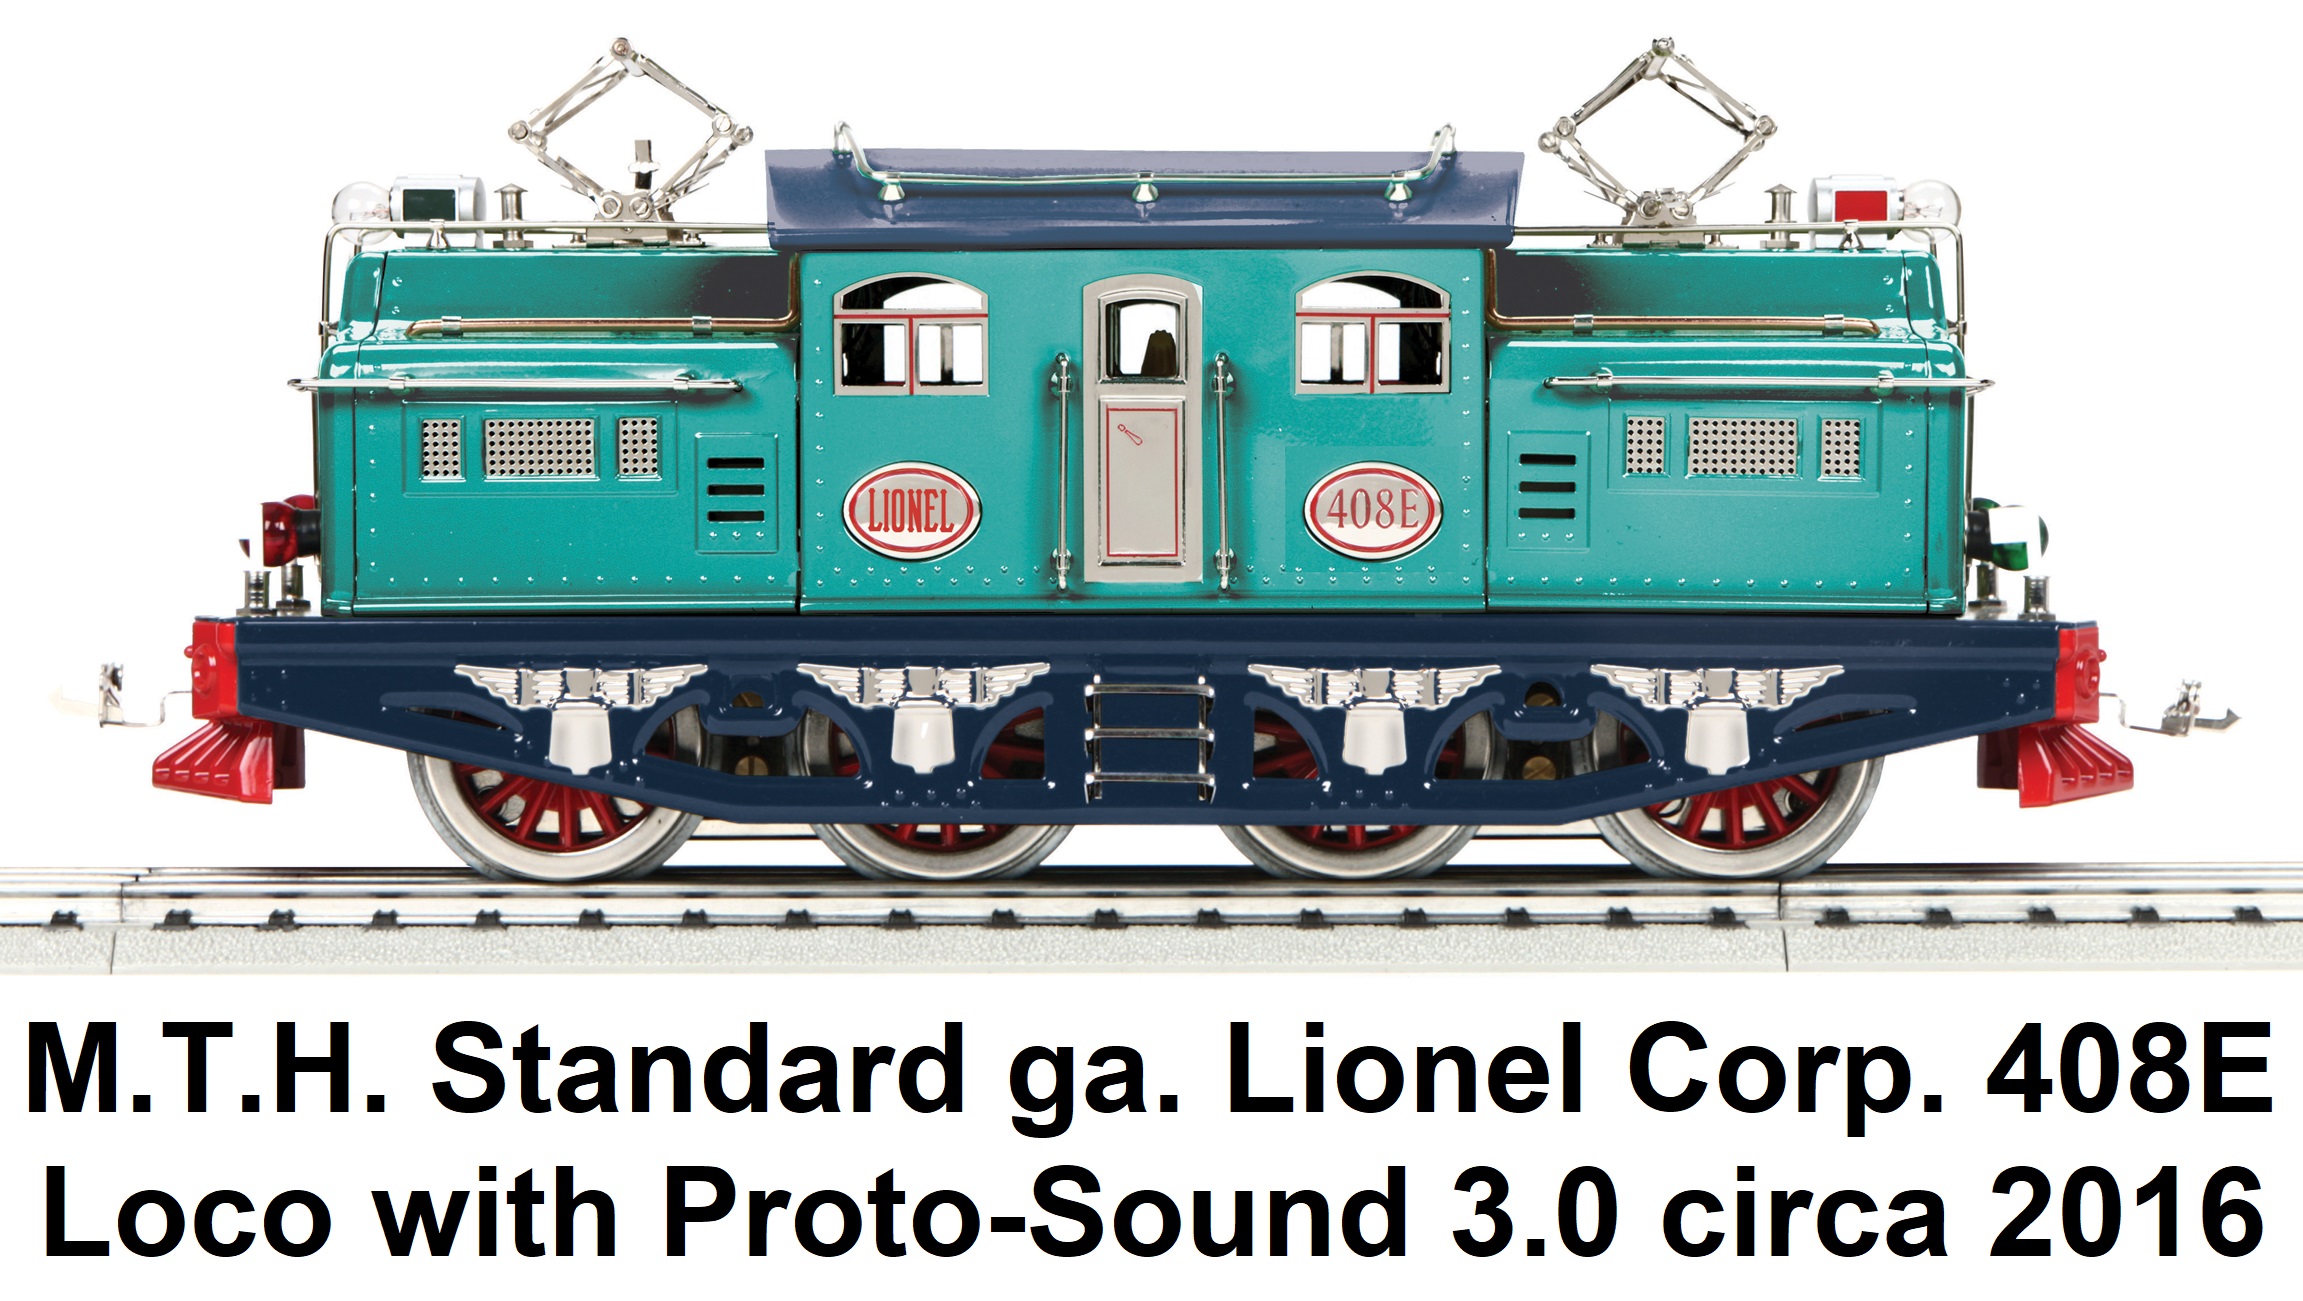 MTH Standard gauge Lionel Corporation Tinplate 408E Electric Loco with Proto-Sound 3.0 circa 2016